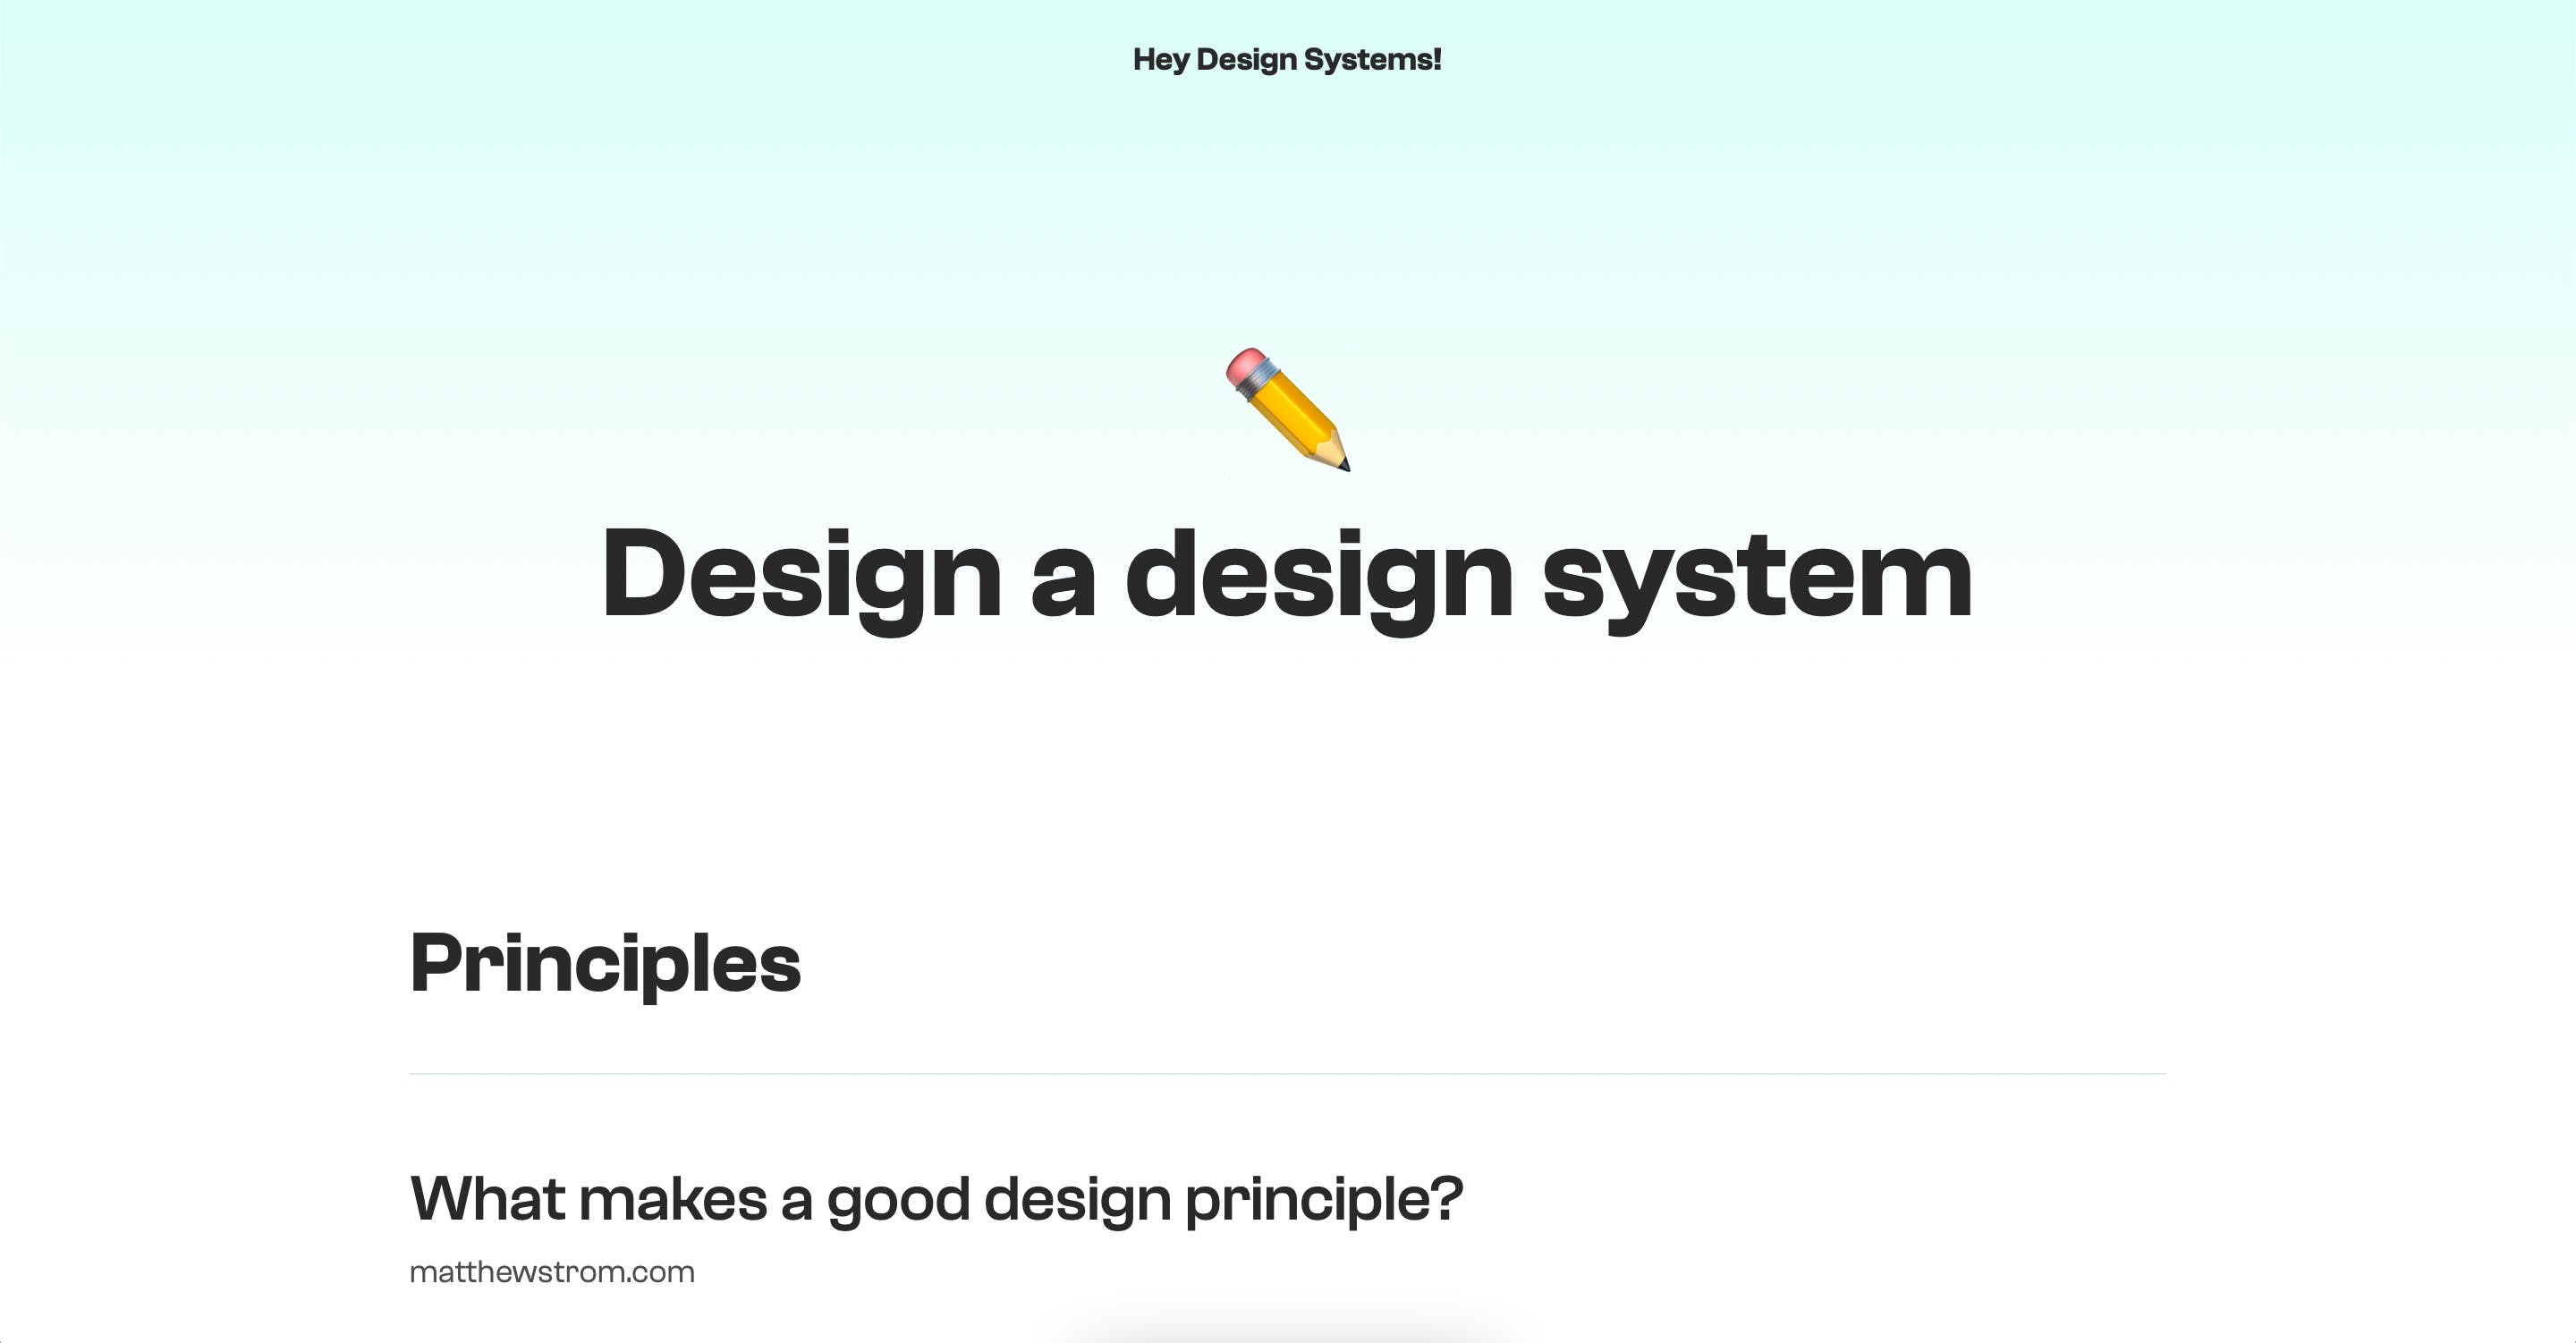 Hey Design Systems media 3